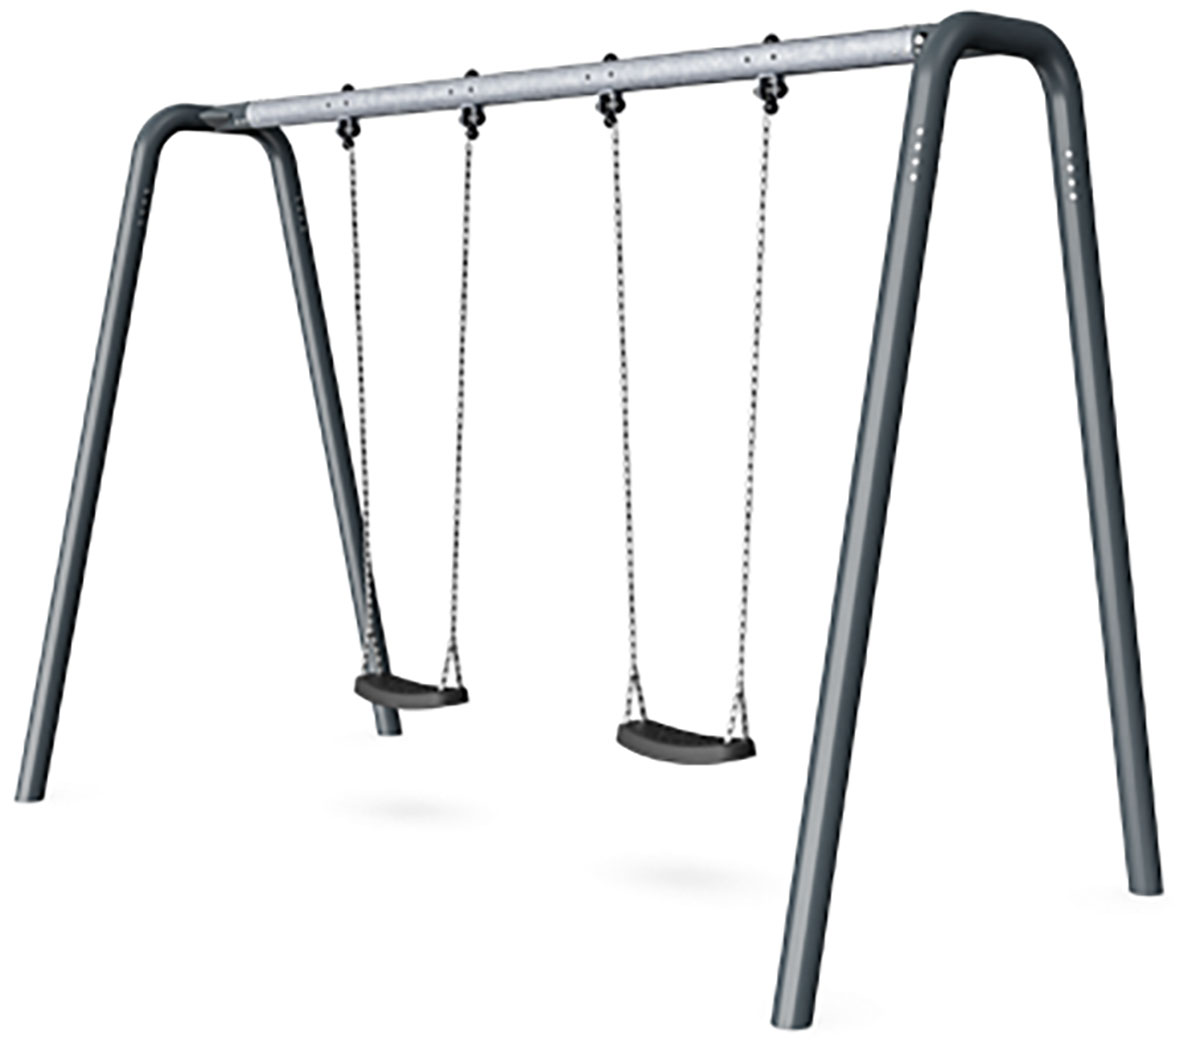 plastic swing set (7)